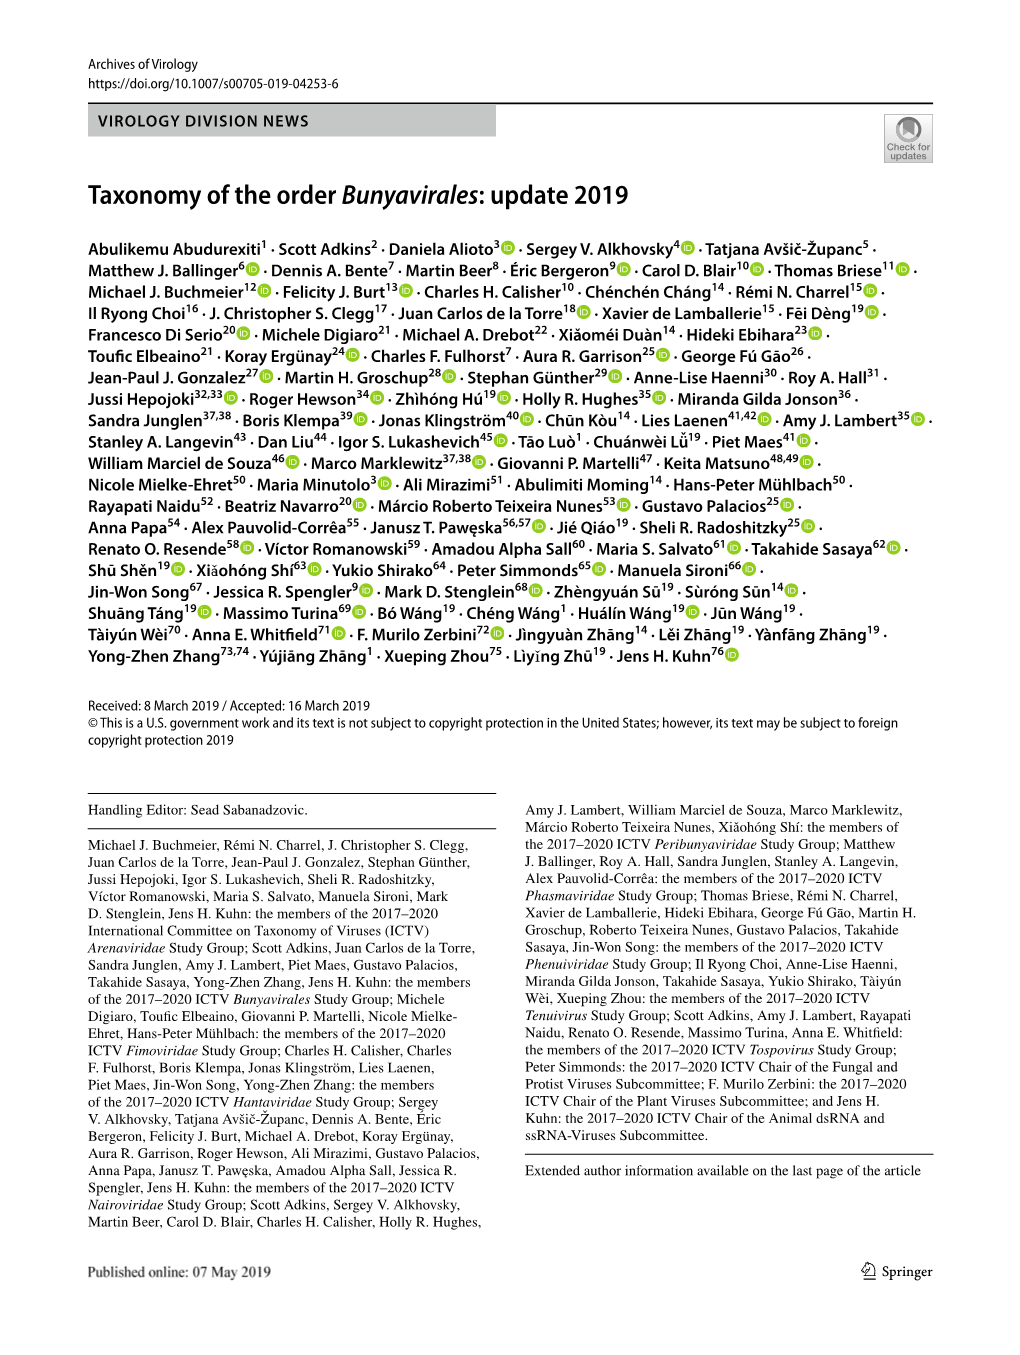 Taxonomy of the Order Bunyavirales: Update 2019